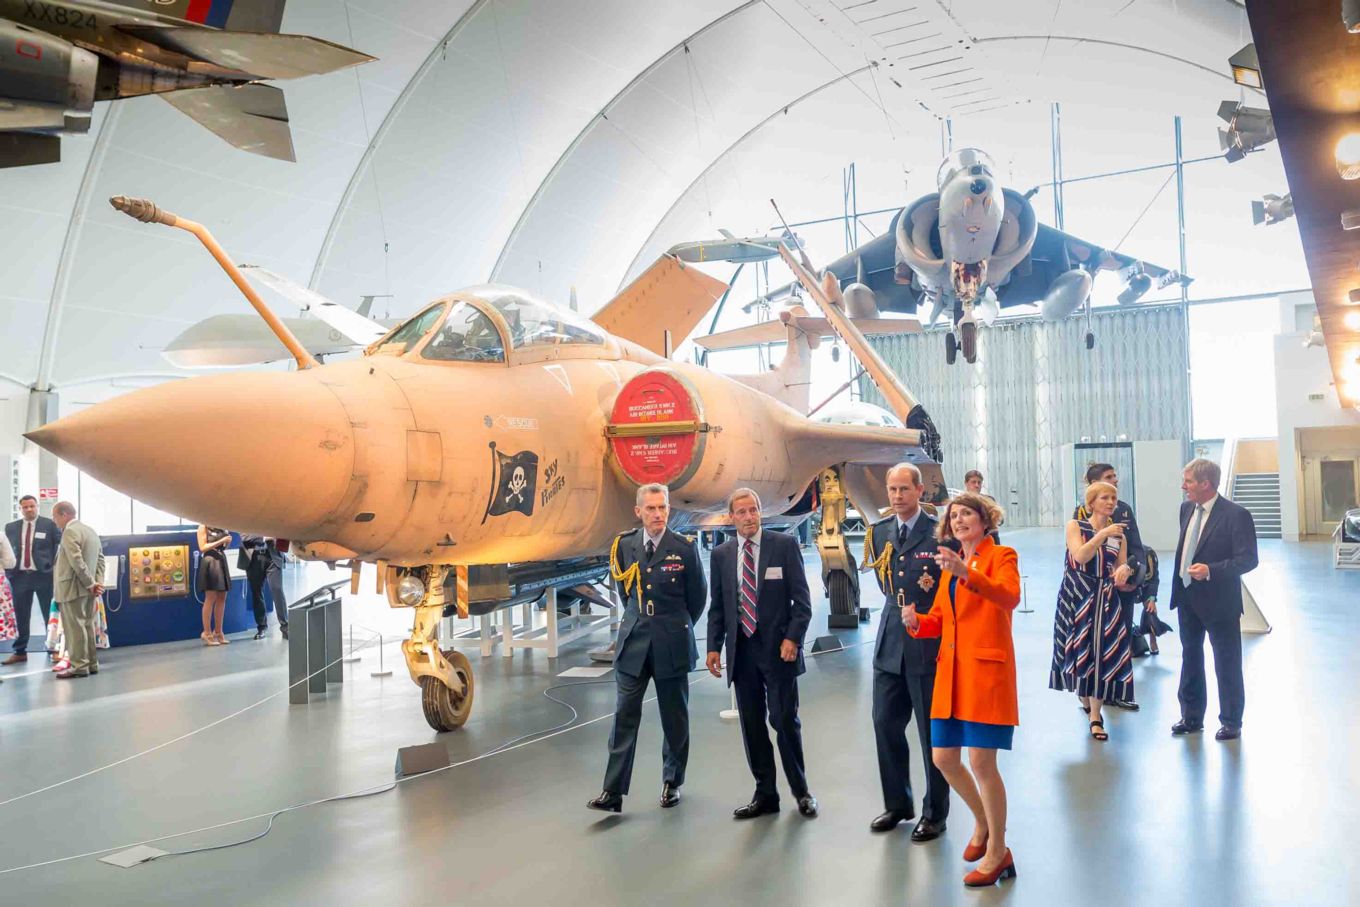 Royal Air Force Museum London Tours